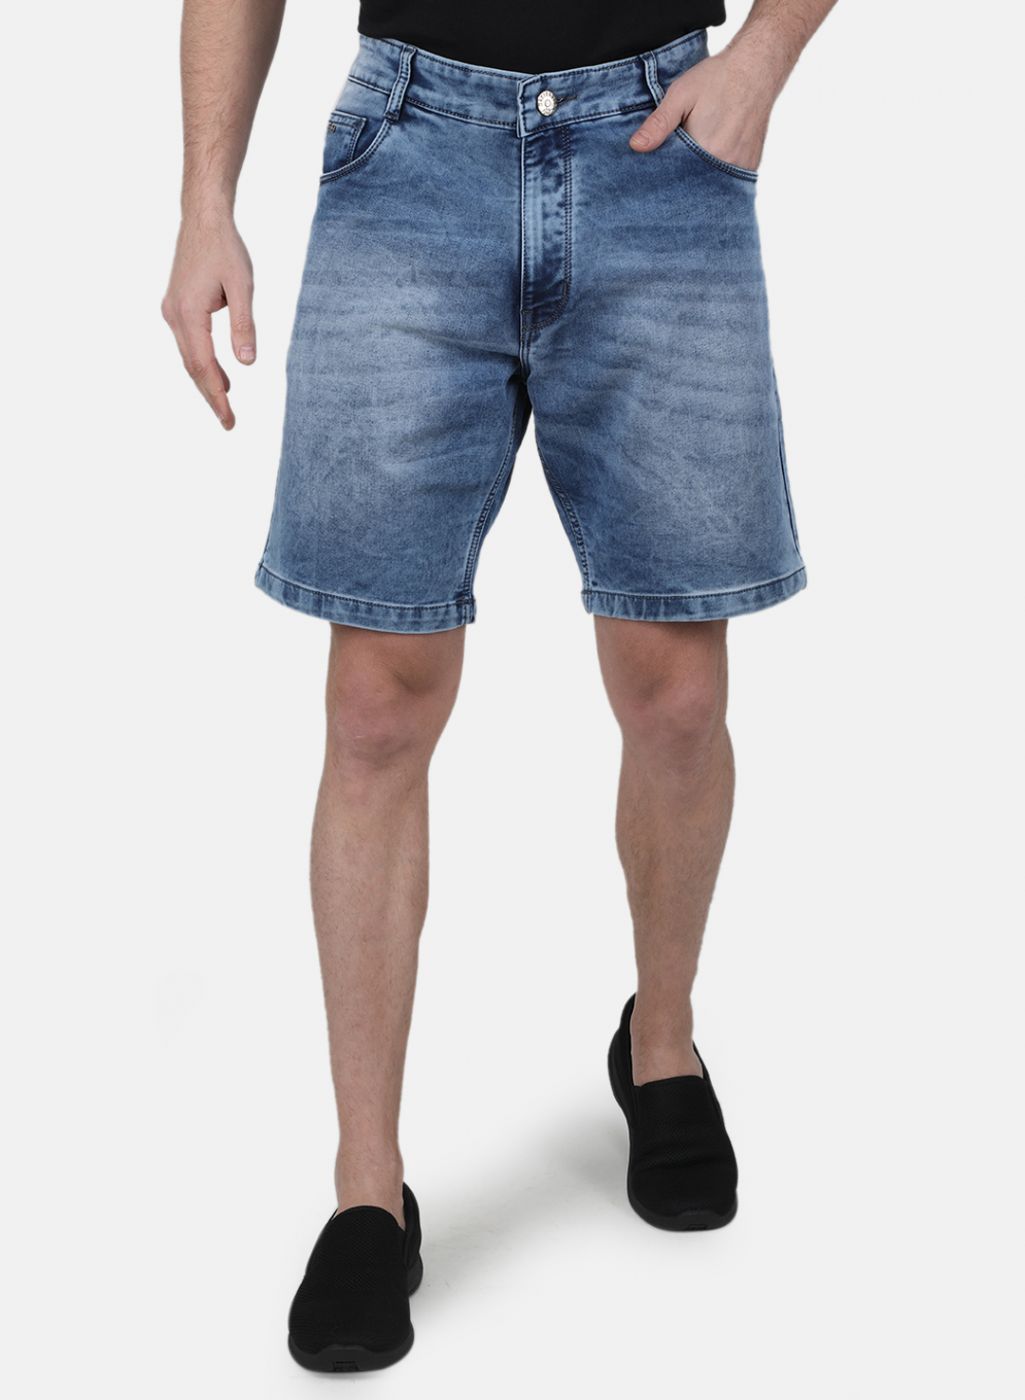 Buy Shorts for Men Online - Mens Cotton Shorts - Monte Carlo